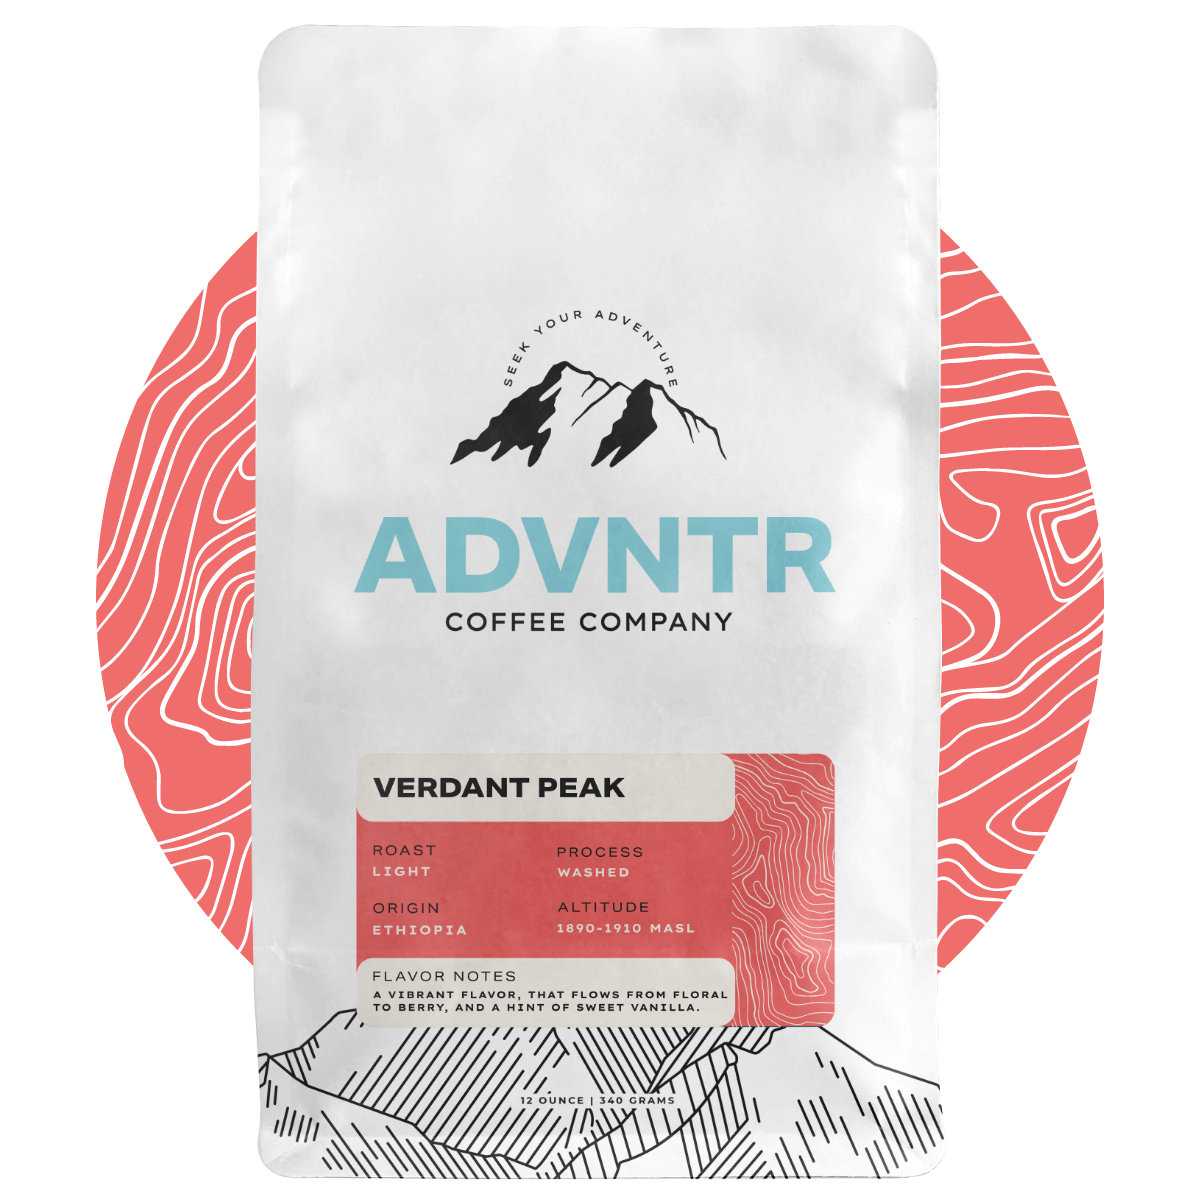 Verdant Peak 12 ounce coffee bag by ADVNTR Coffee Co.